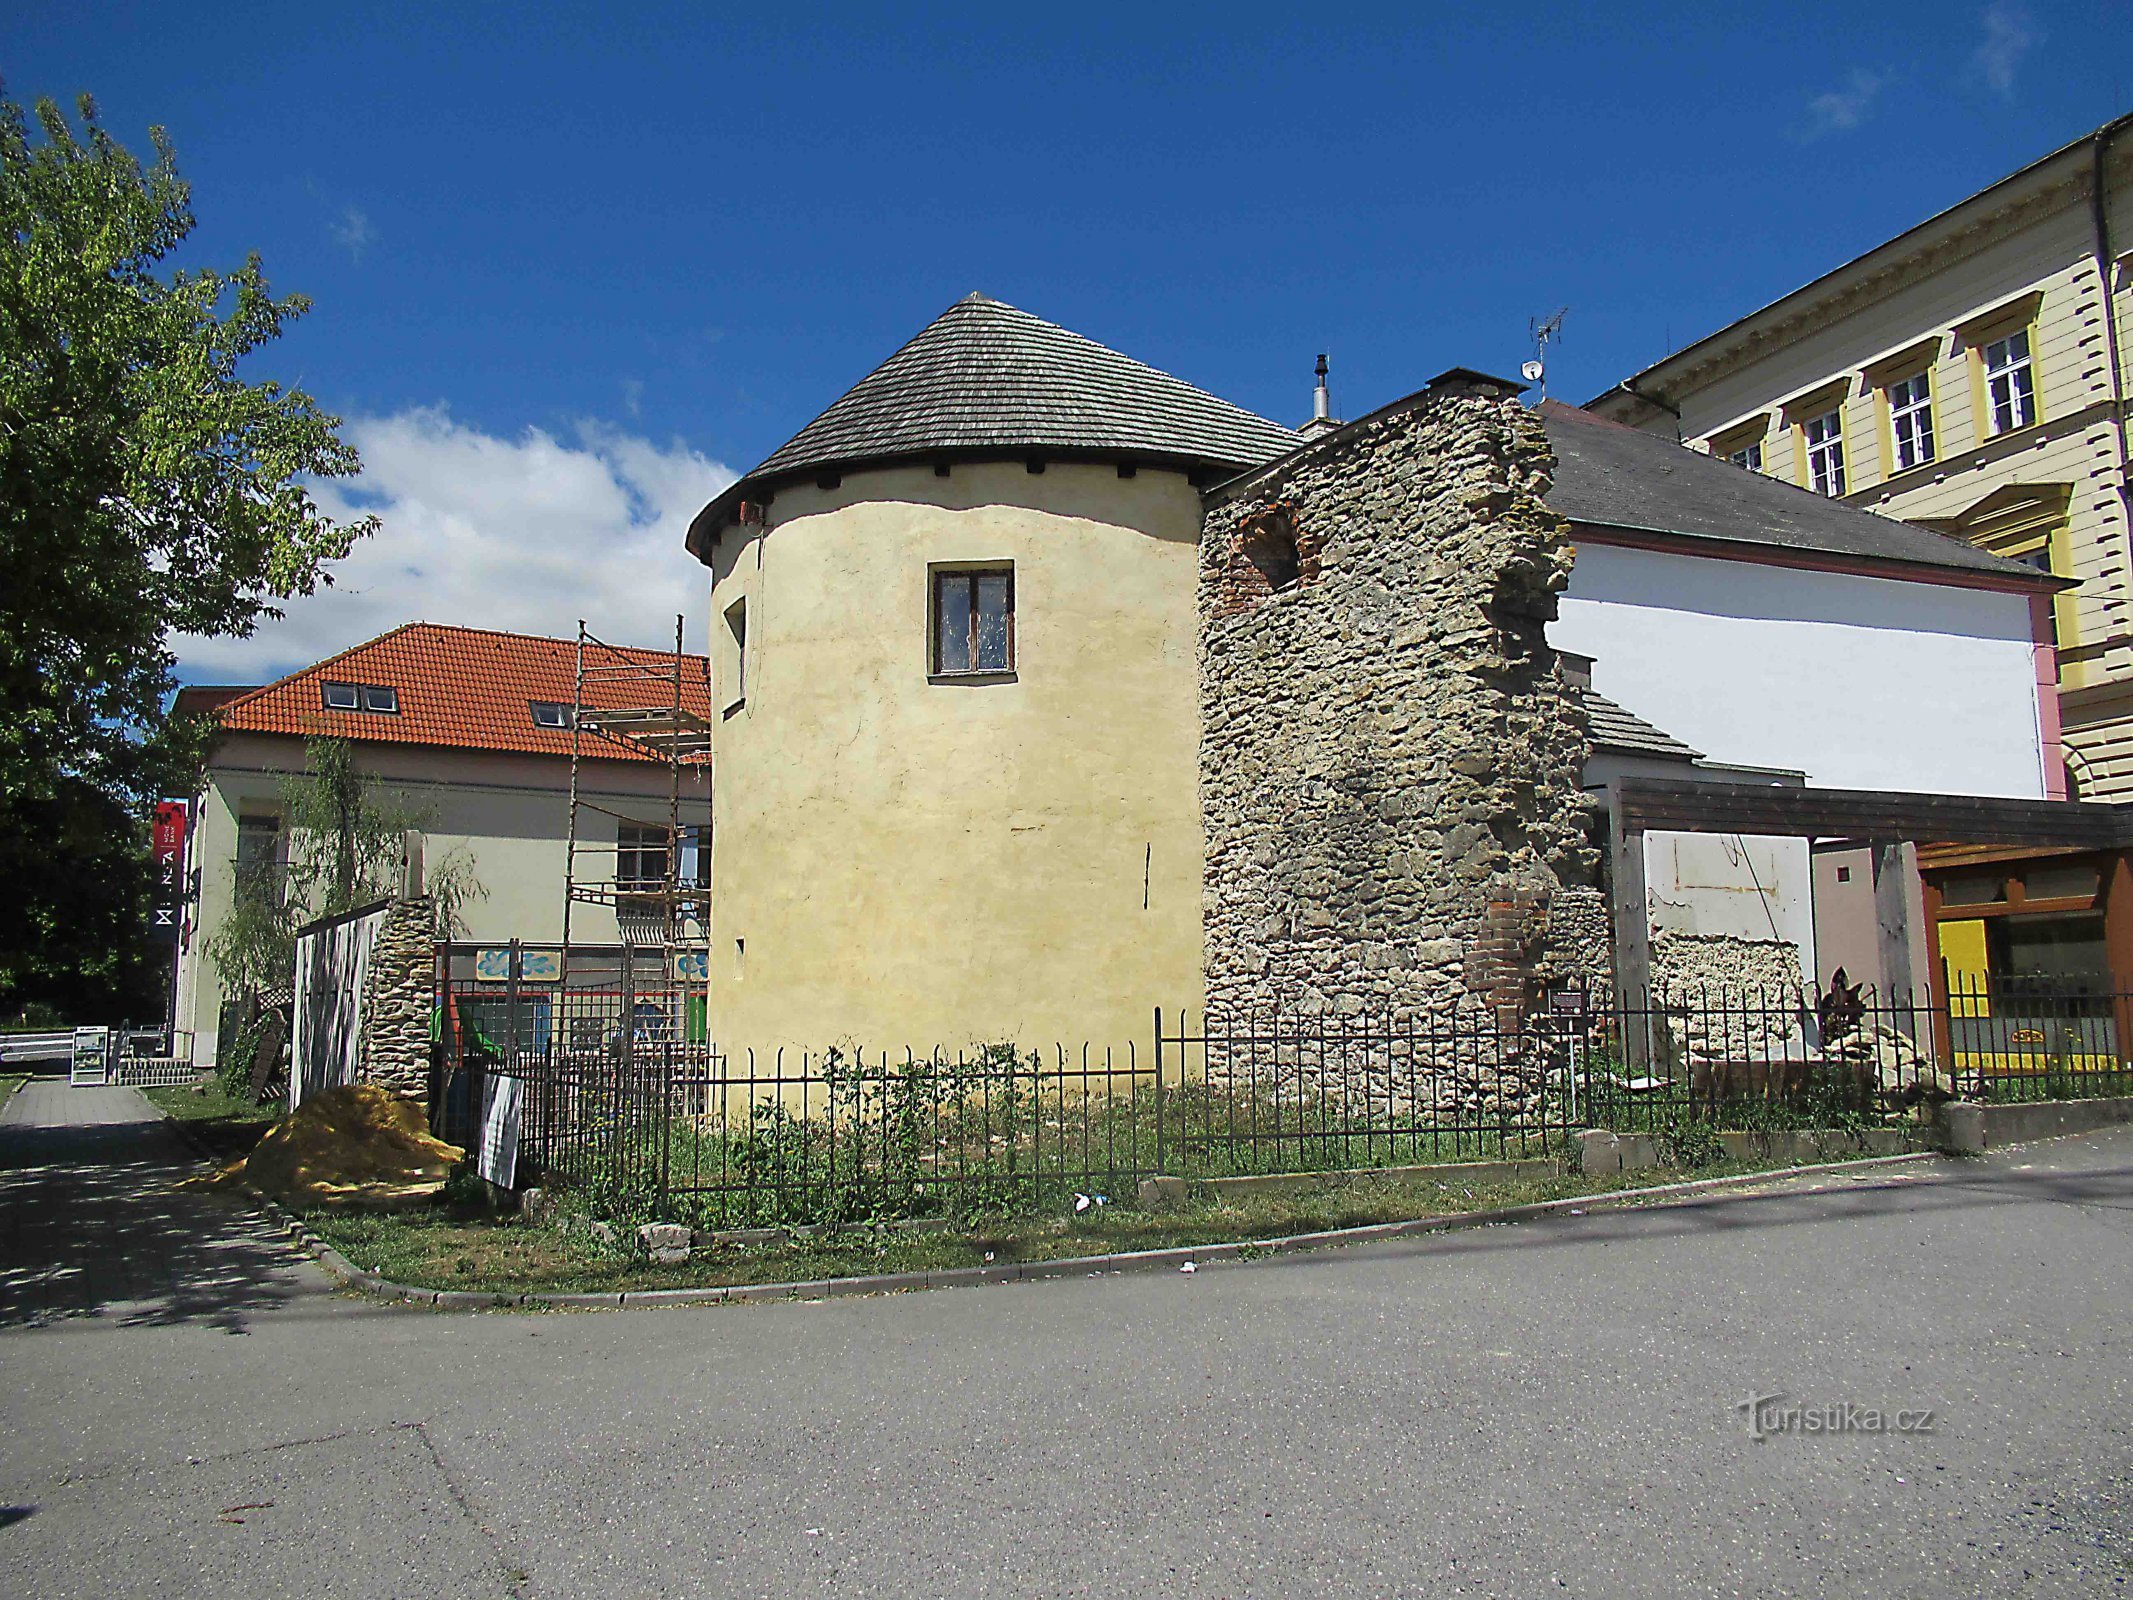 Ostanki mestnih utrdb v Svitavyju